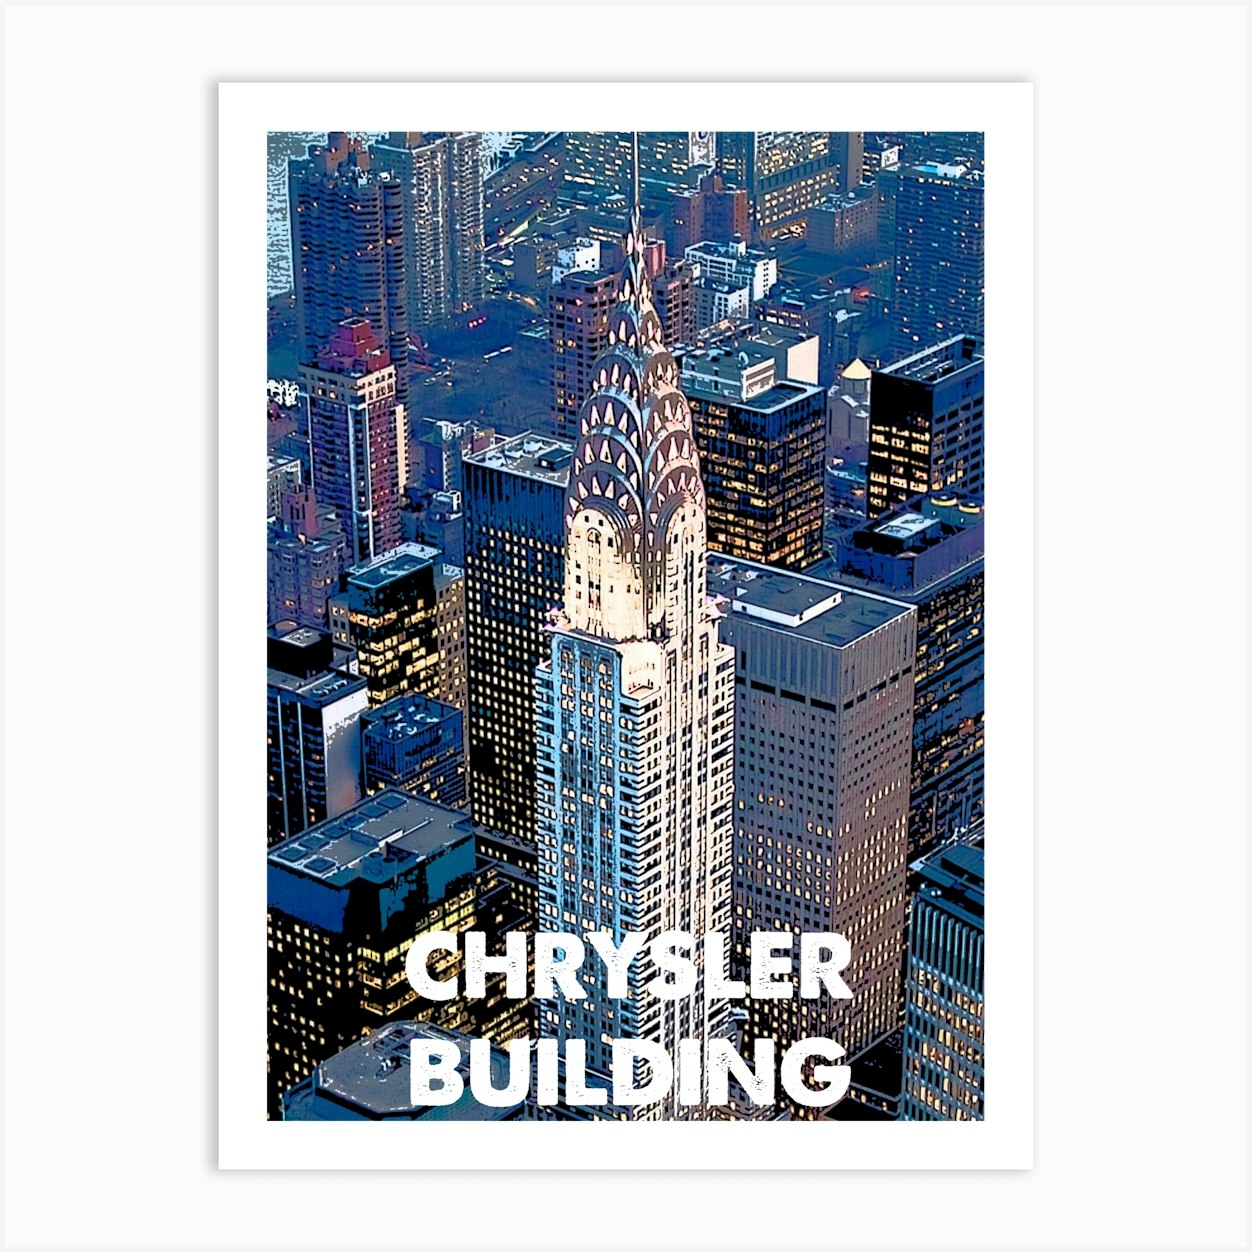 Chrysler Building, New York, Landmark, Wall Print, Wall Art, Poster, Print,  Art Print by PrintDeco - Fy